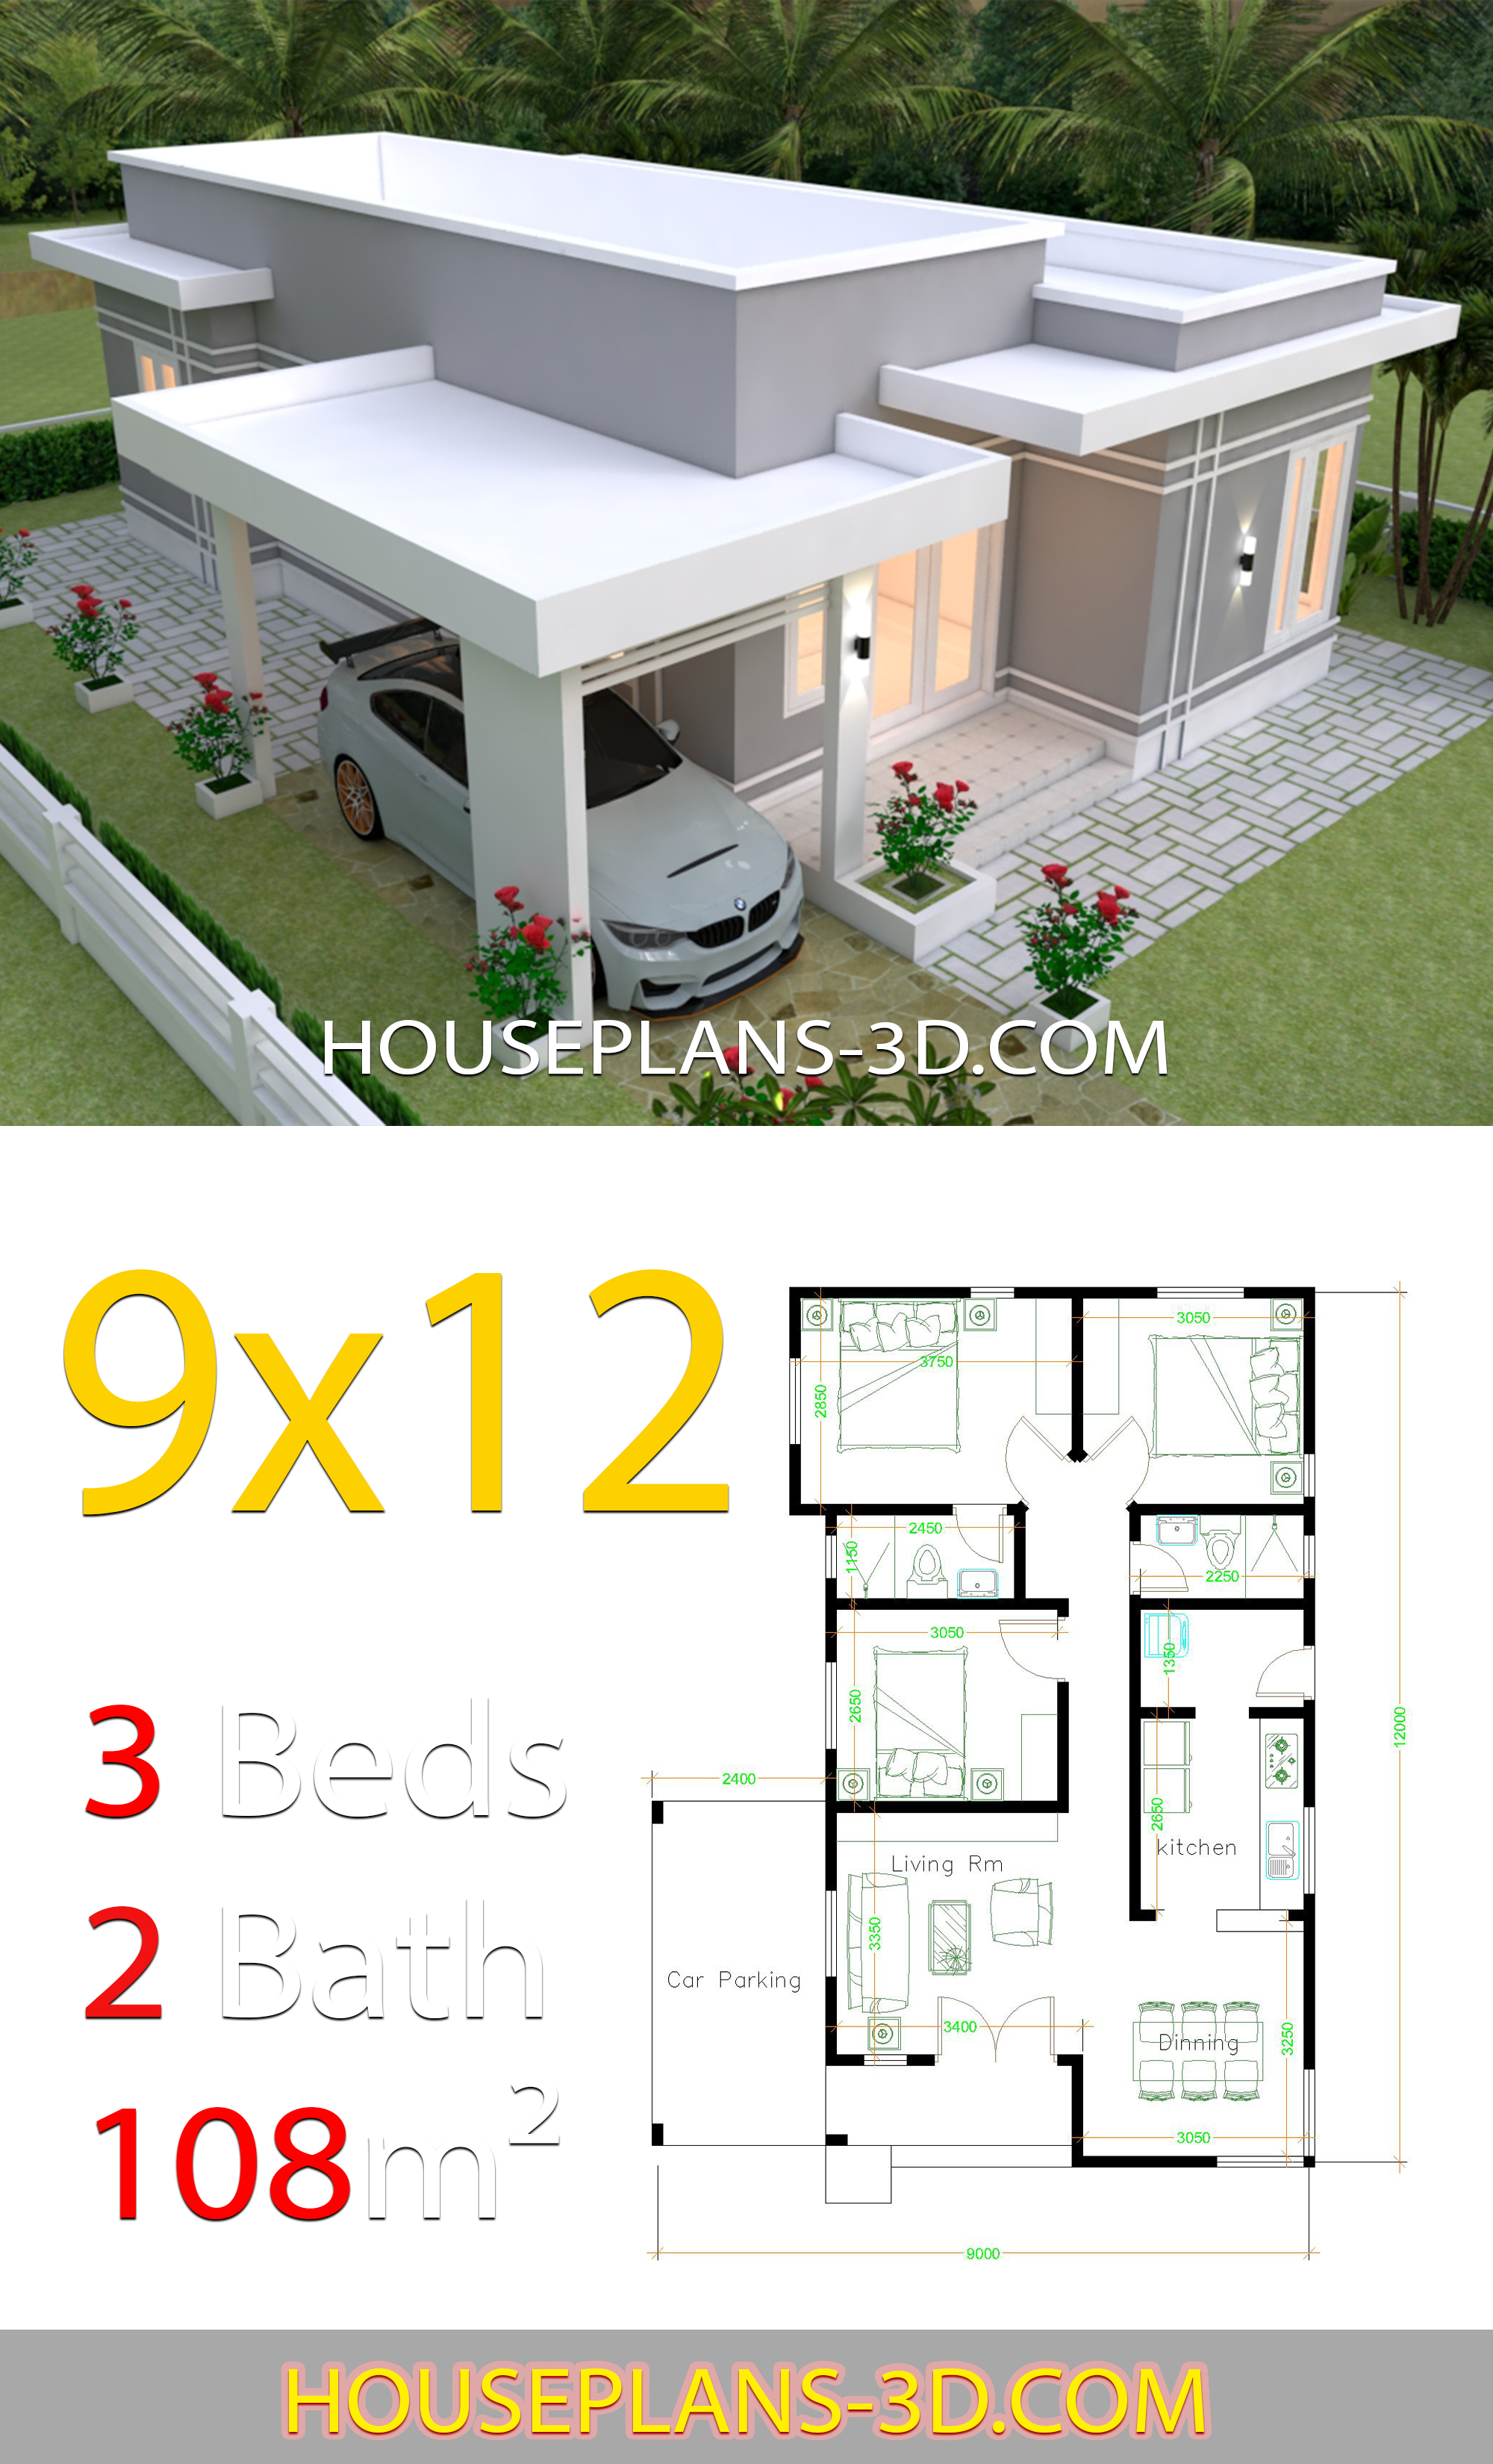 3 bedroom house design